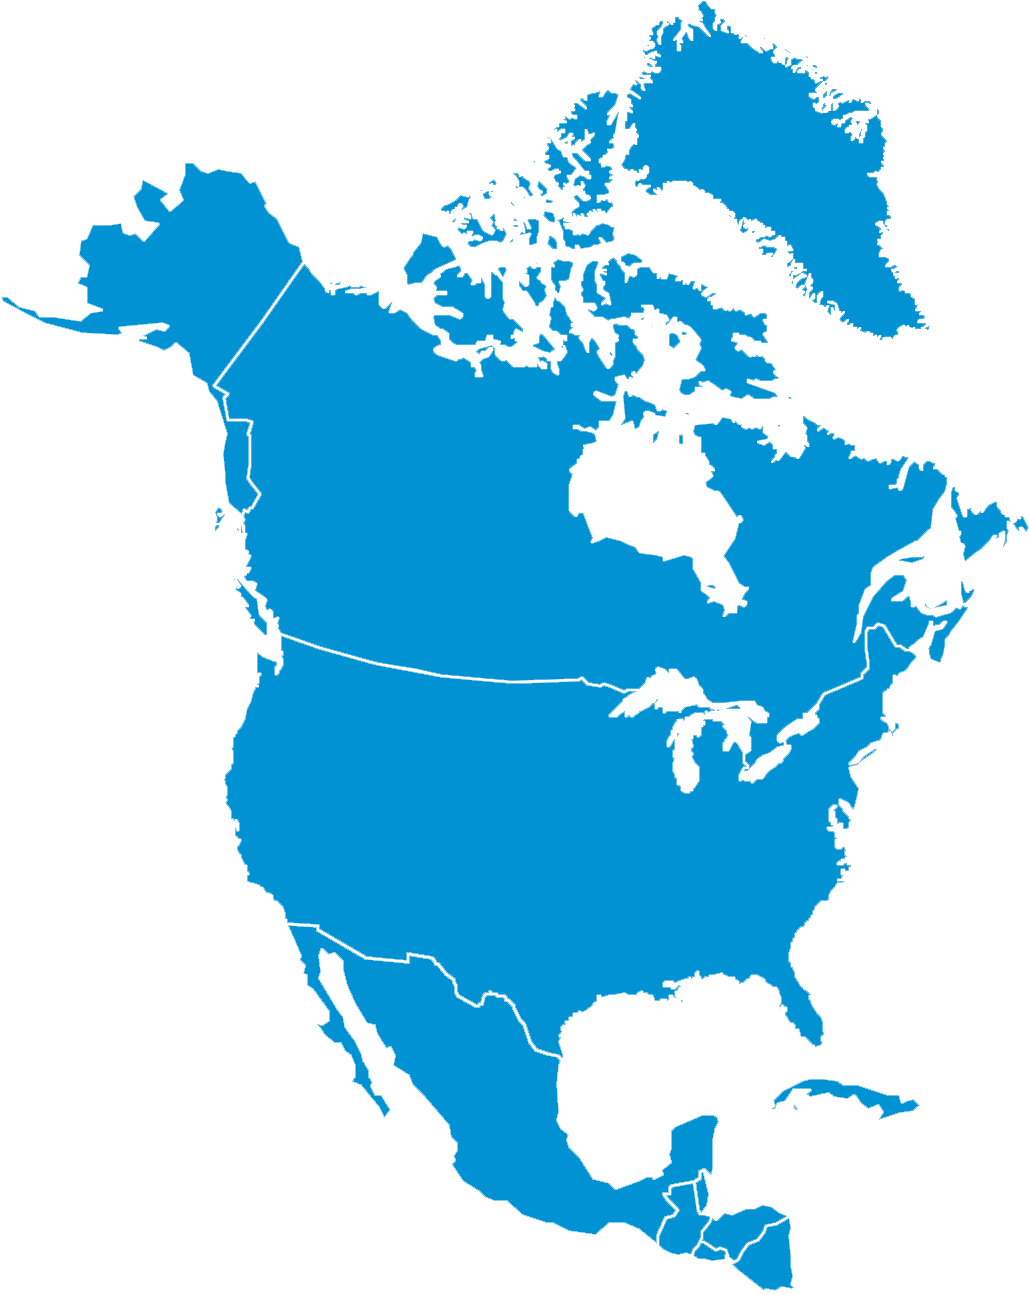 World america. Геоконтур Северной Америки. Континент Северная Америка на карте. Северная Америка материк. Континент Континент Северной Америки.